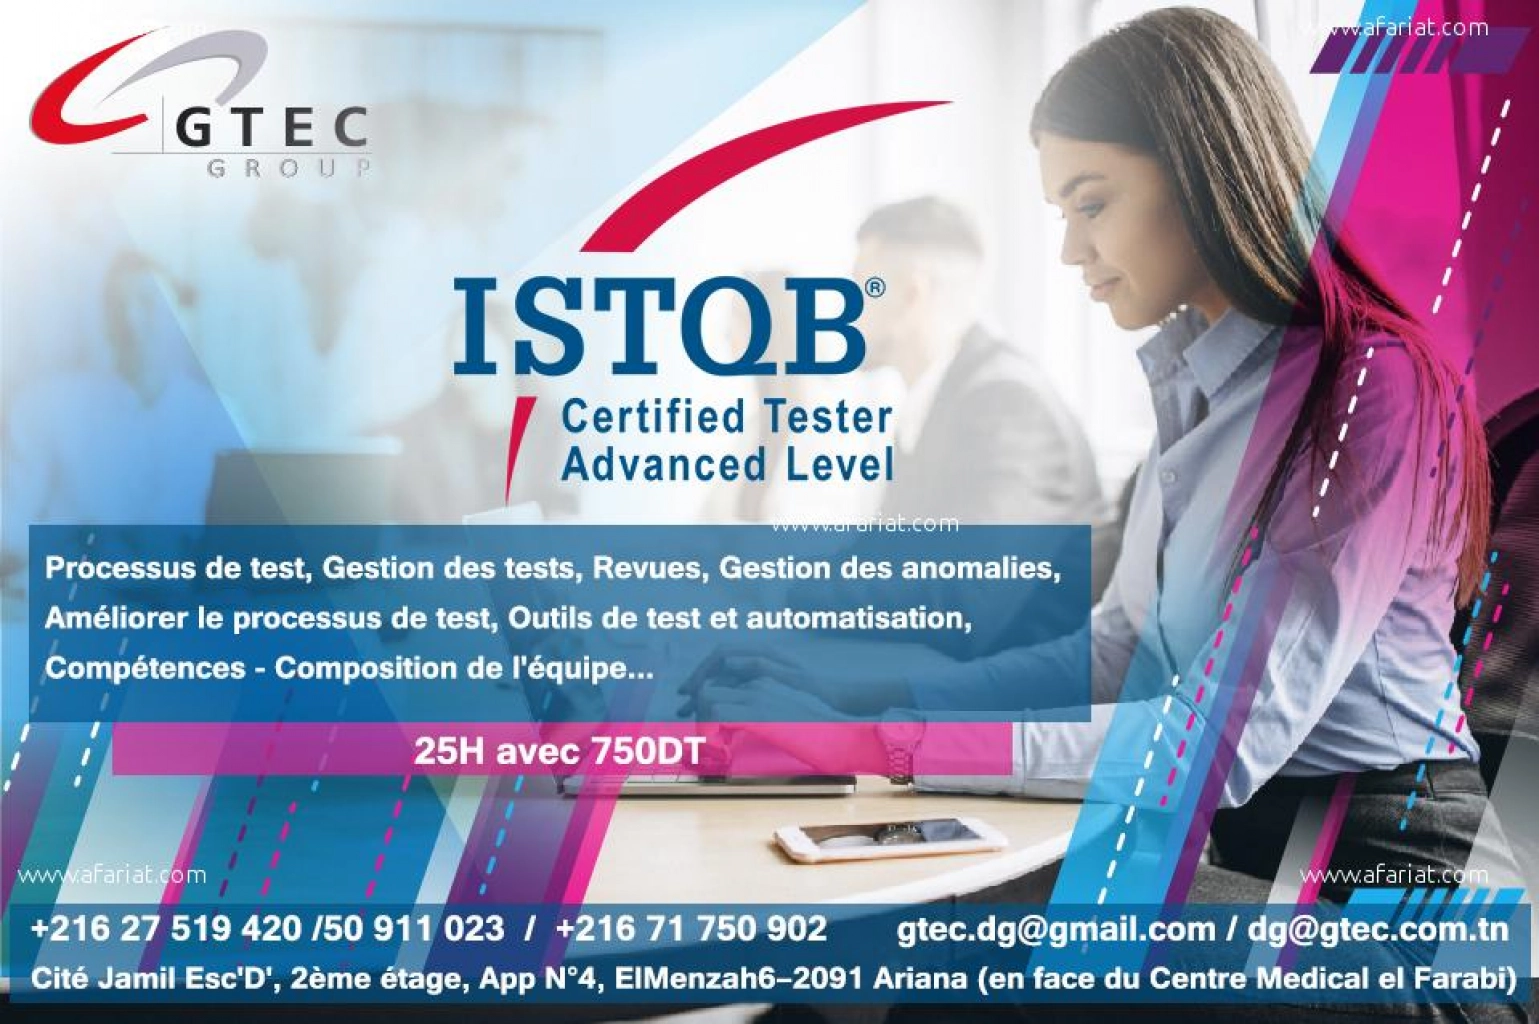 Certification istqb advanced level afariat com